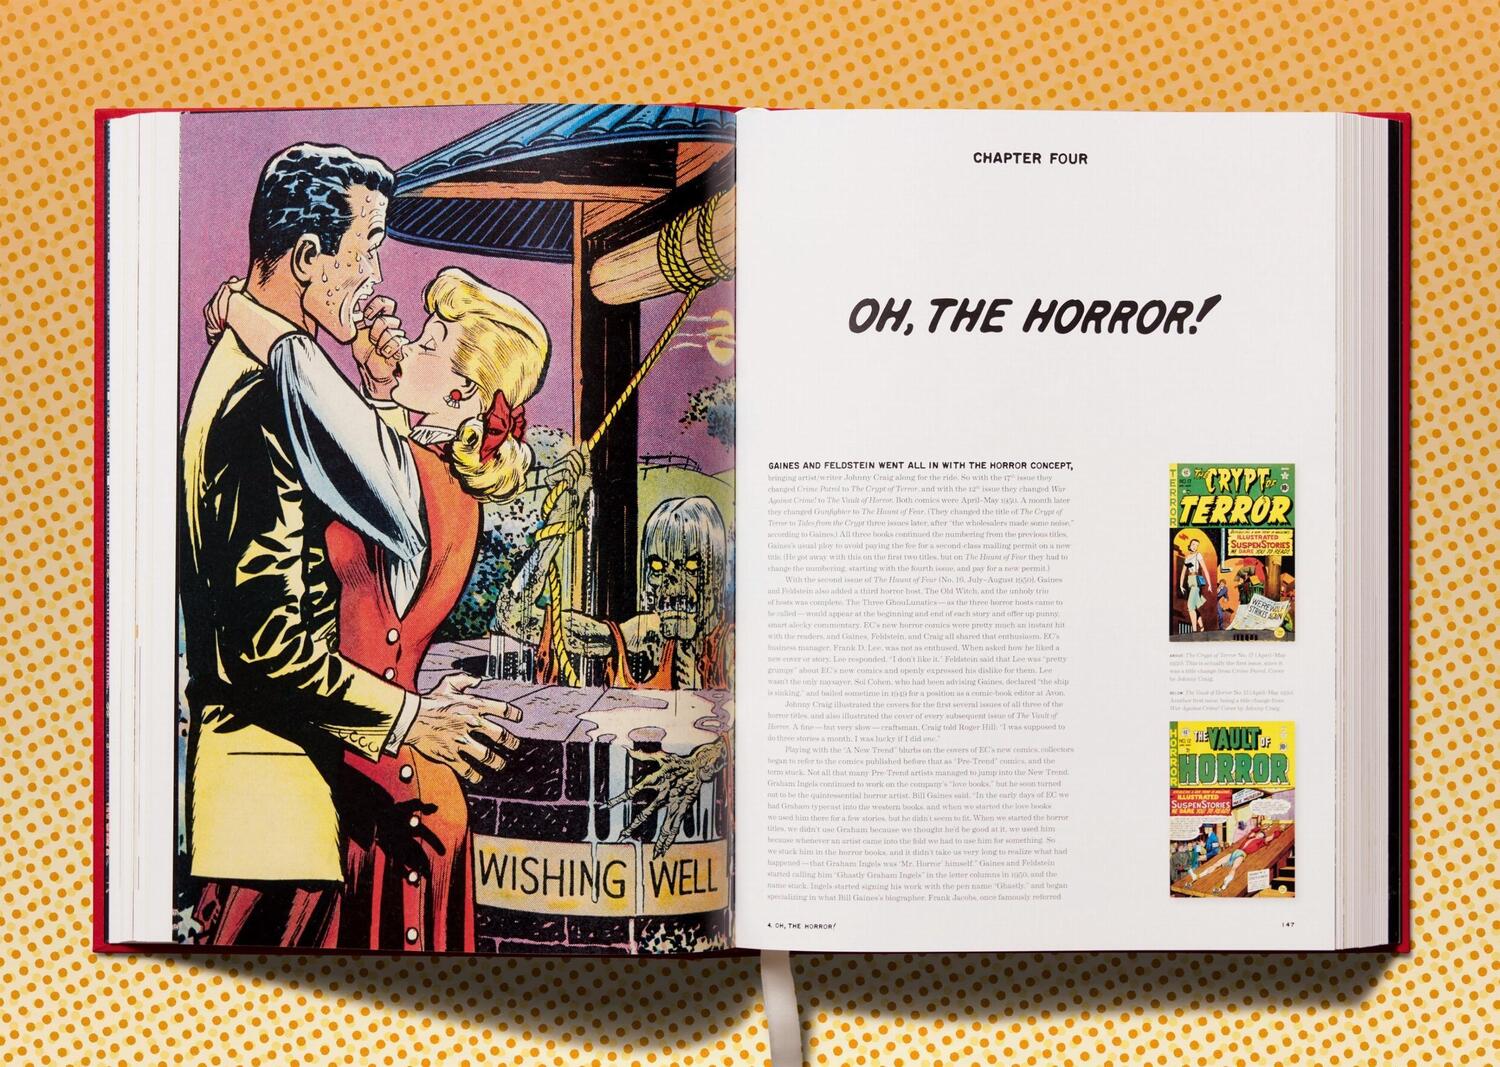 Bild: 9783836549769 | The History of EC Comics | Grant Geissman | Buch | GER, Hardcover